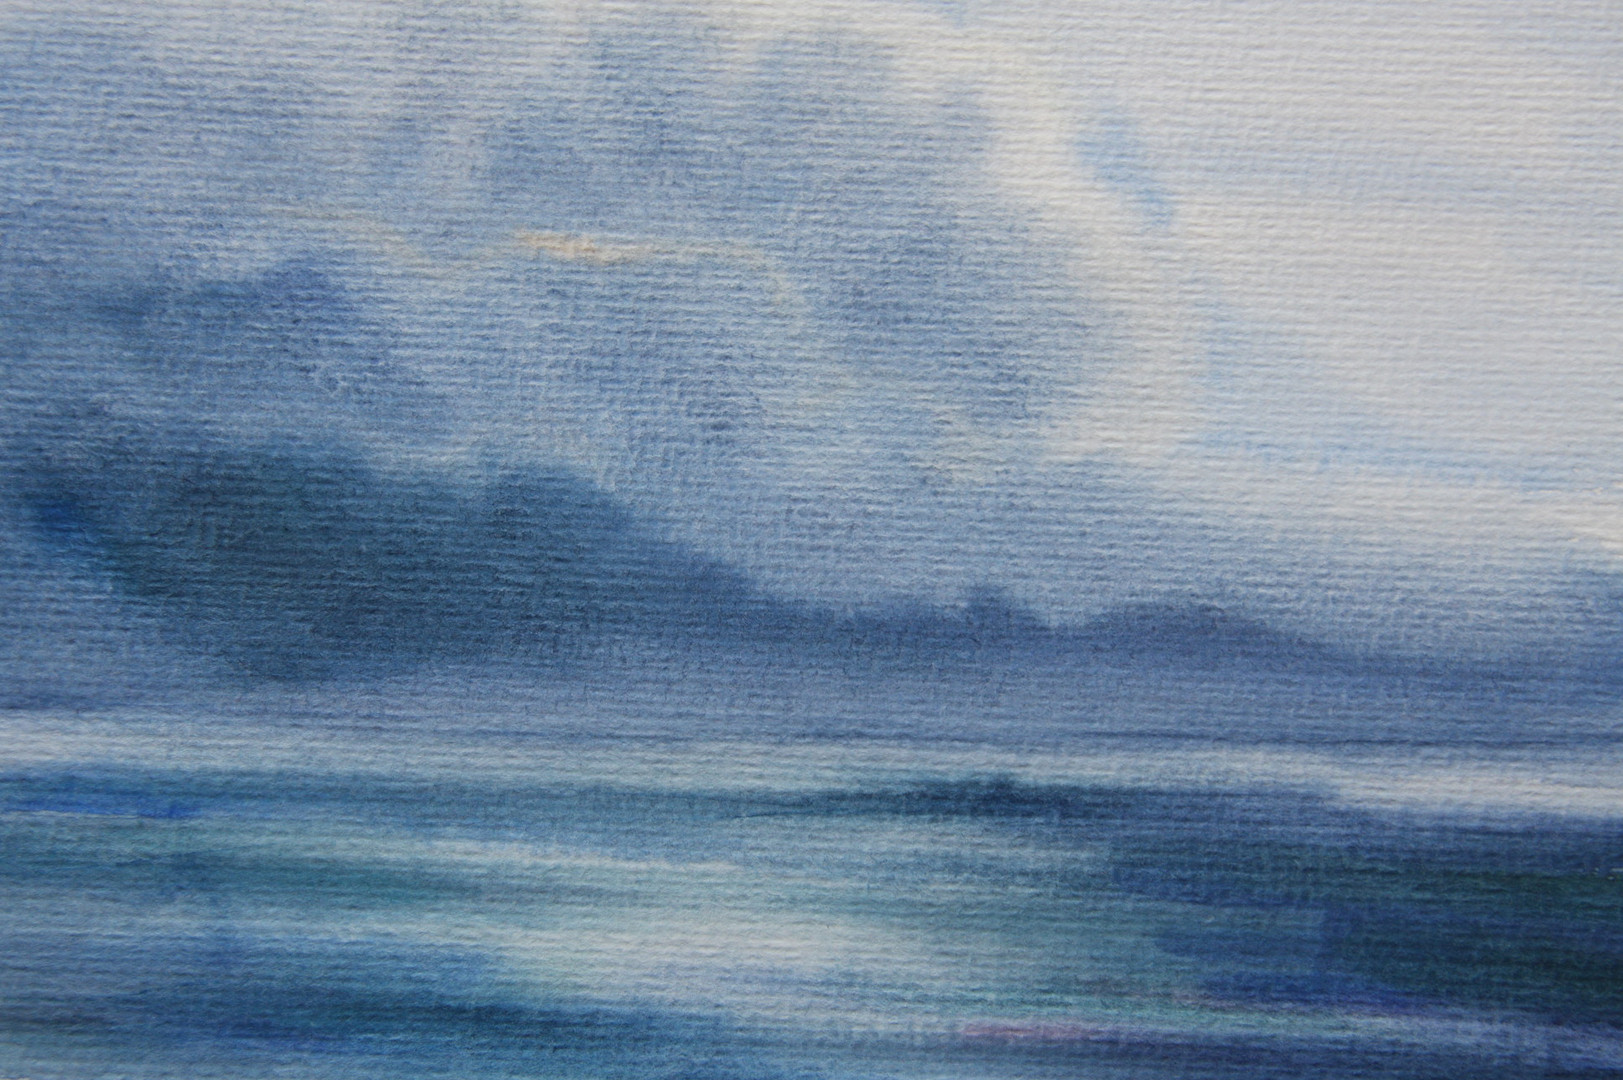 Wolke über dem Meer, Aquarell, 18x24 cm